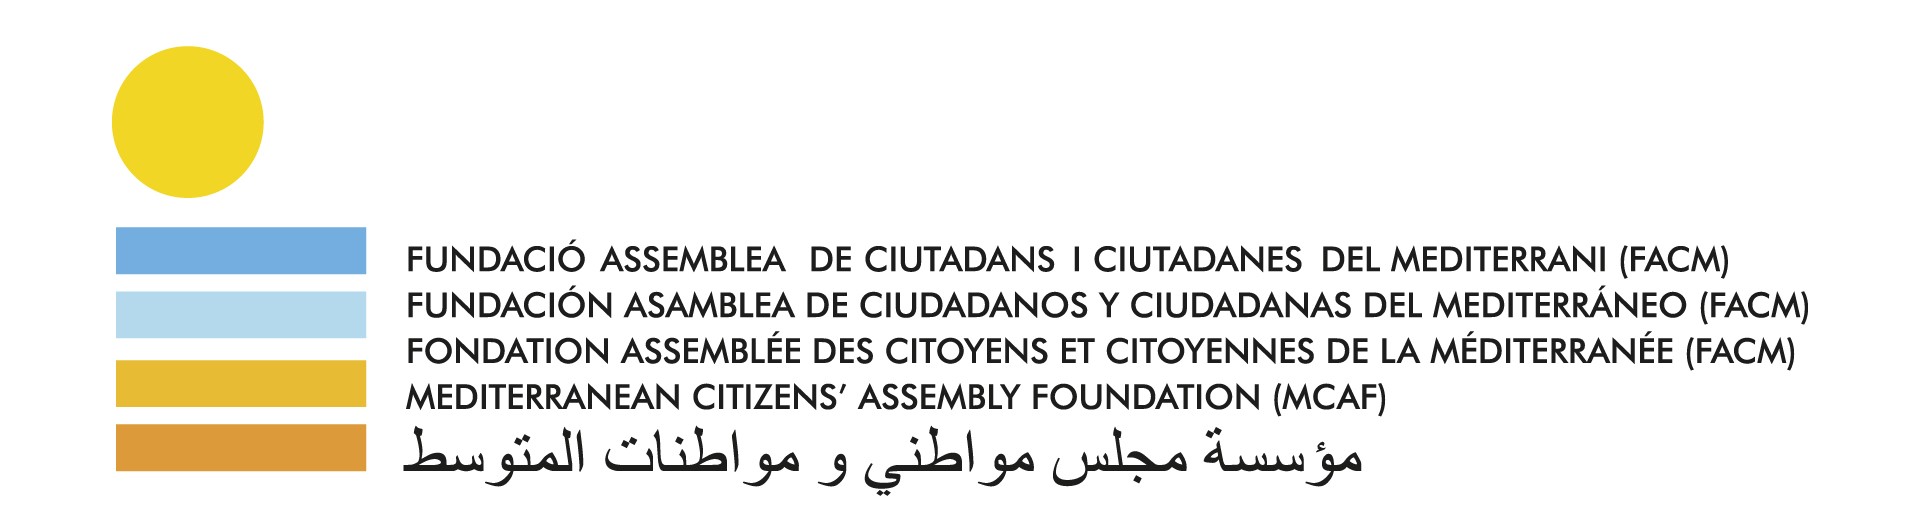 Mediterranean Citizens’ Assembly Foundation (MCAF) logo